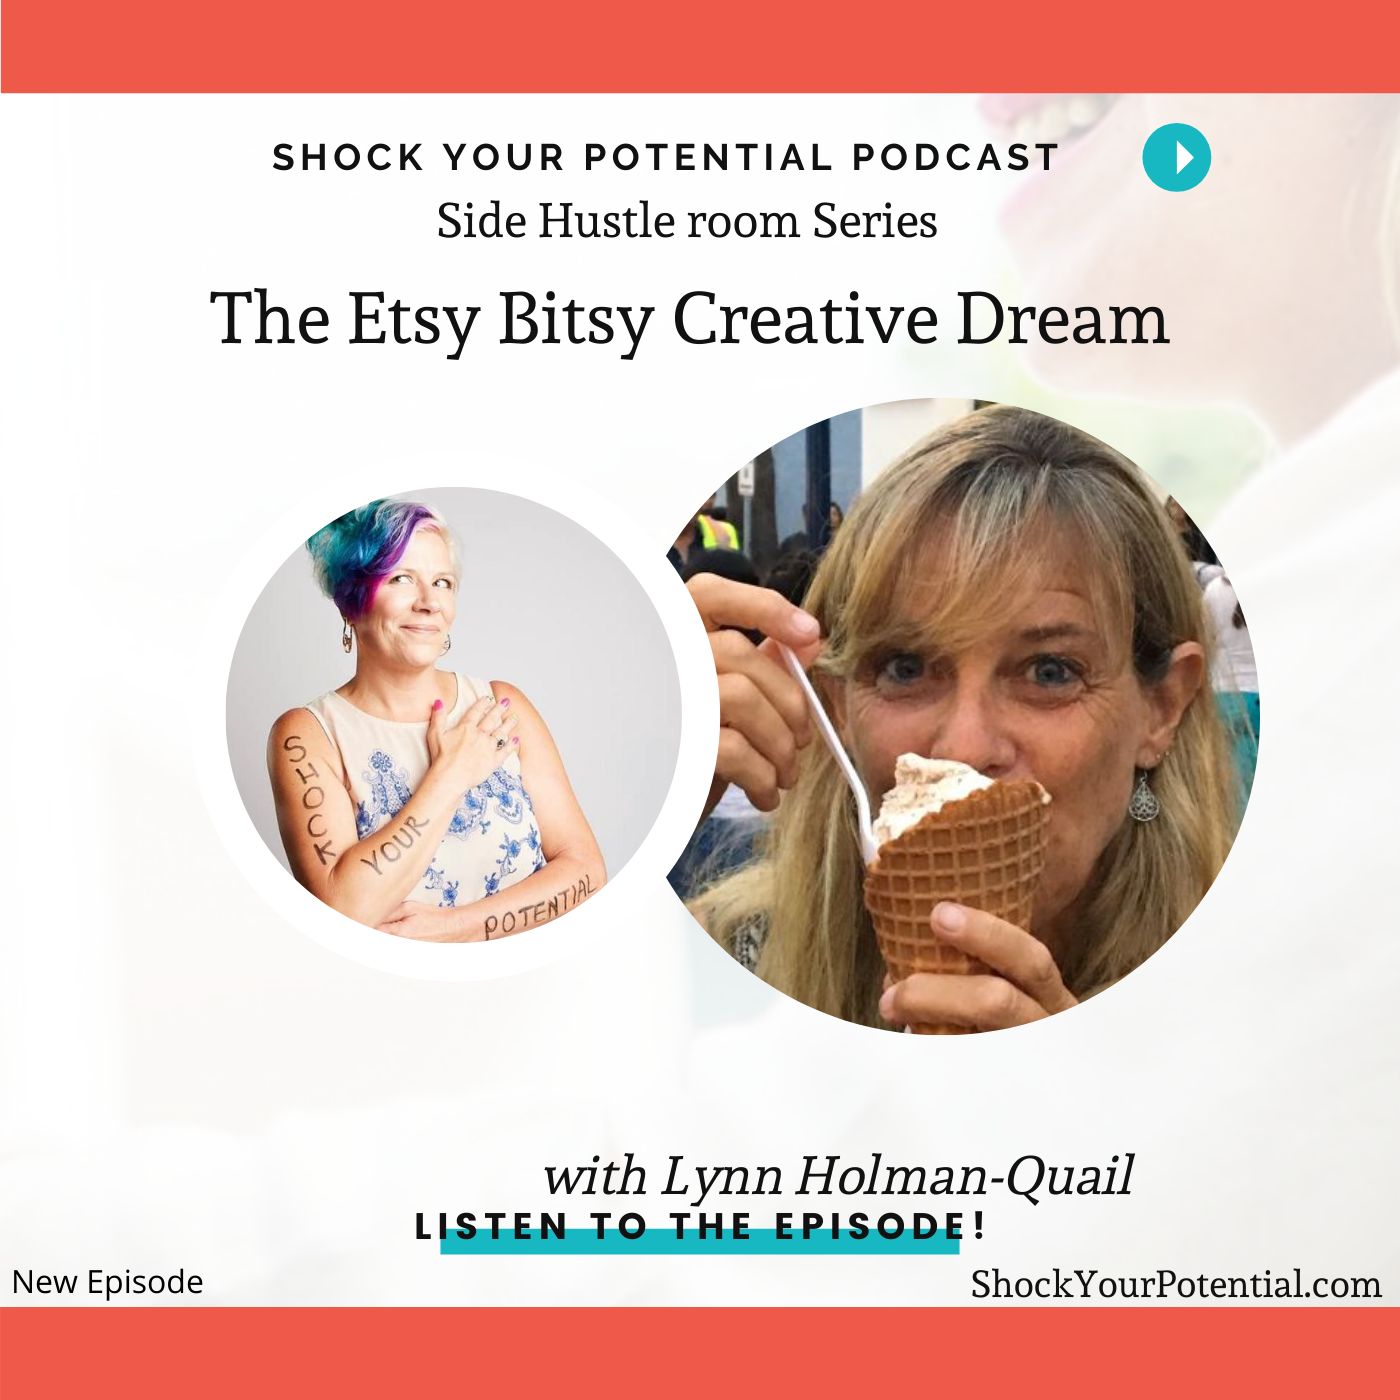 The Etsy Bitsy Creative Dream – Lynn Holeman-Quail